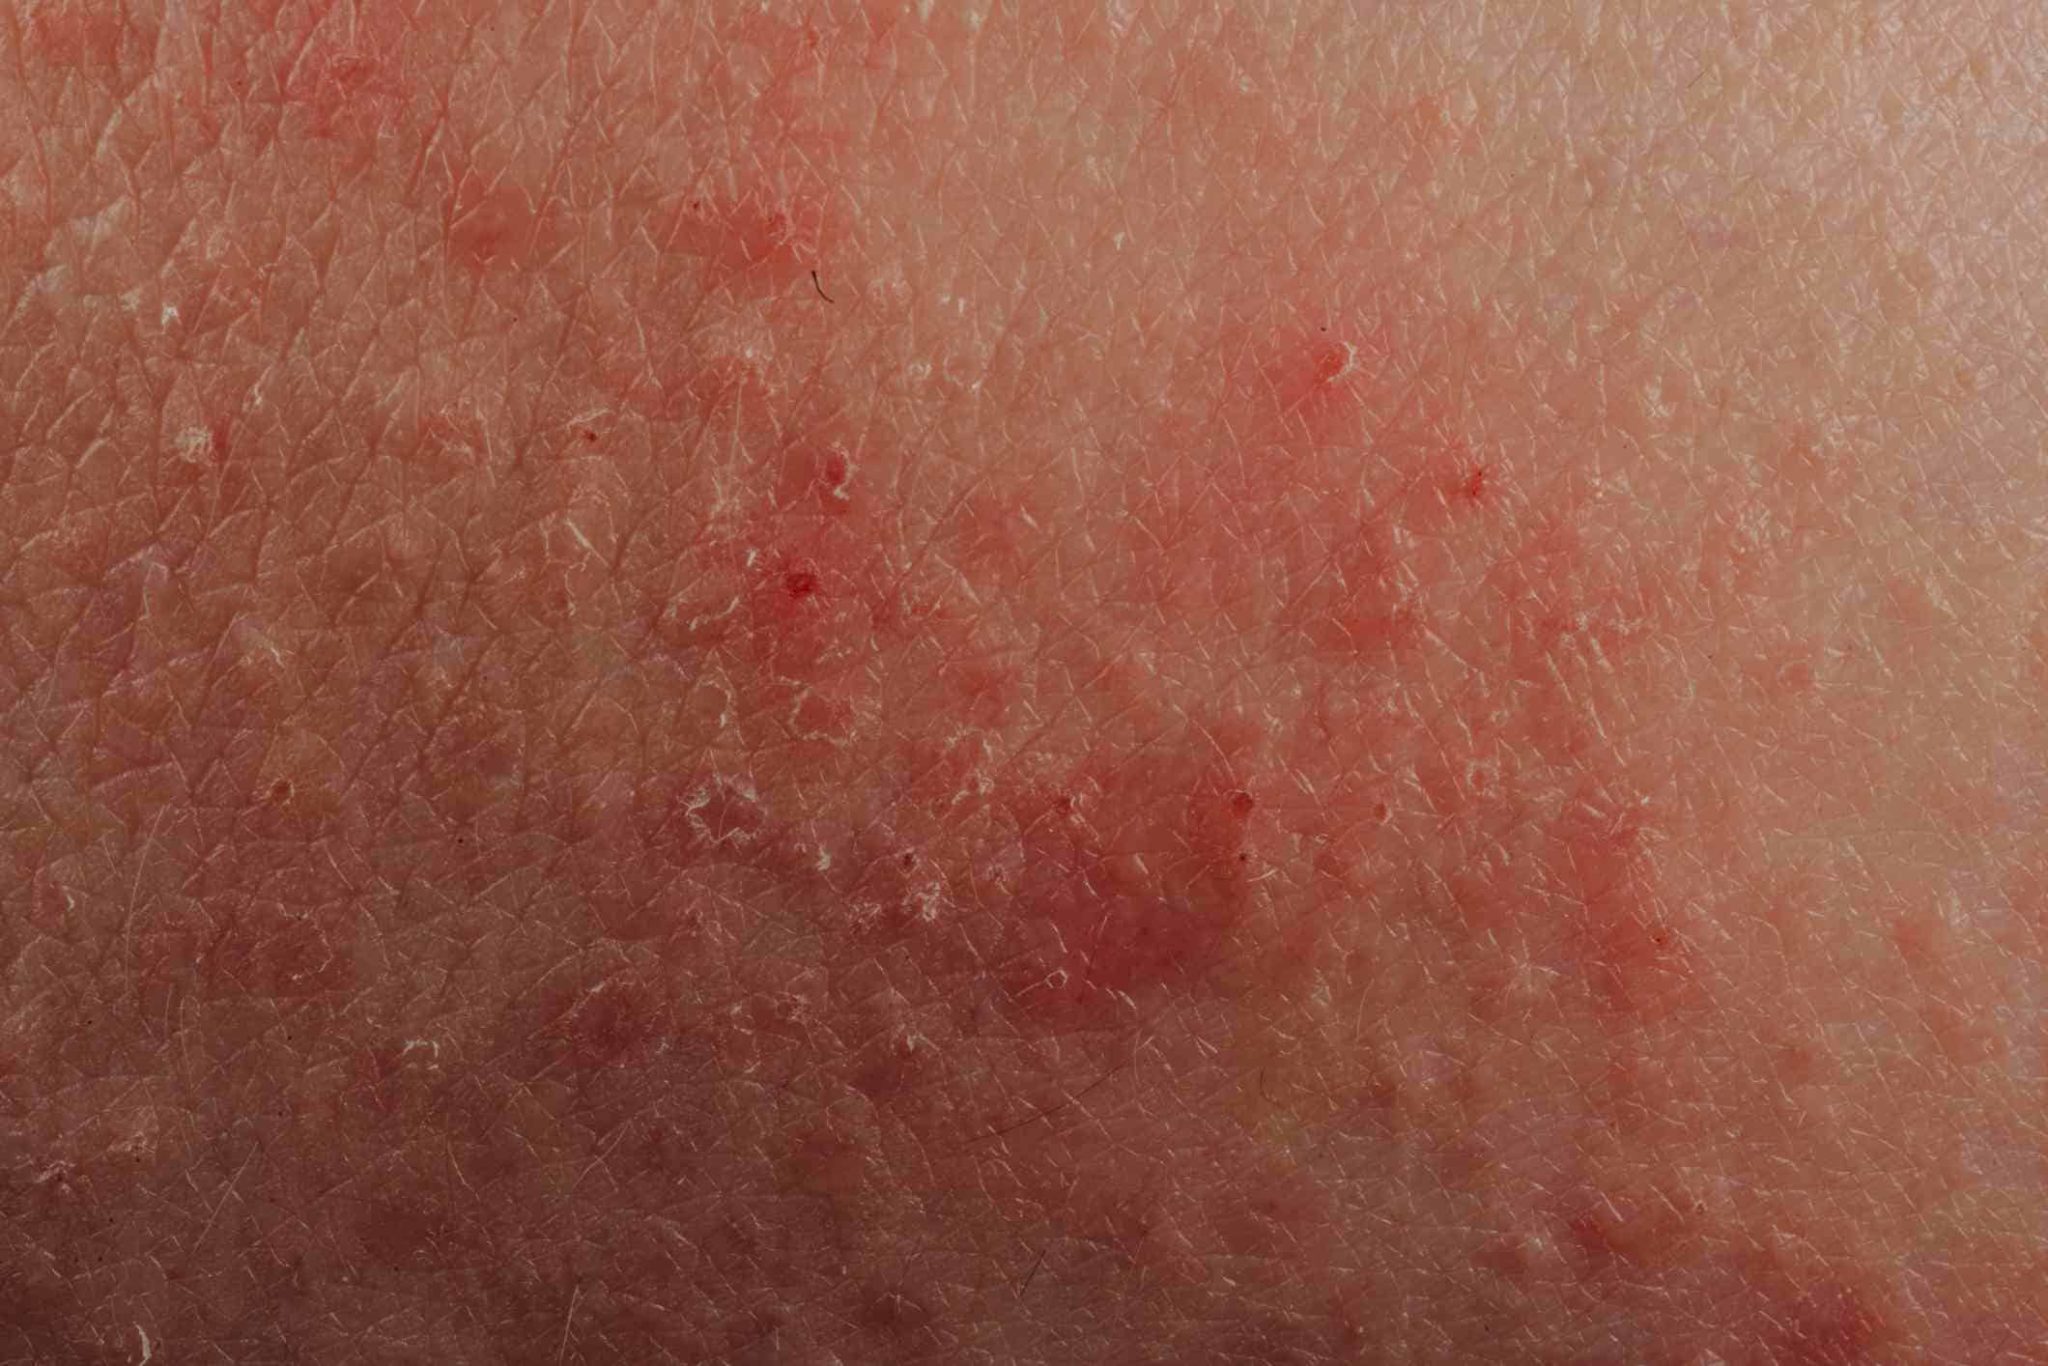 Skin Problems Sensitivity Eczema Acne Rosacea And Your Gut